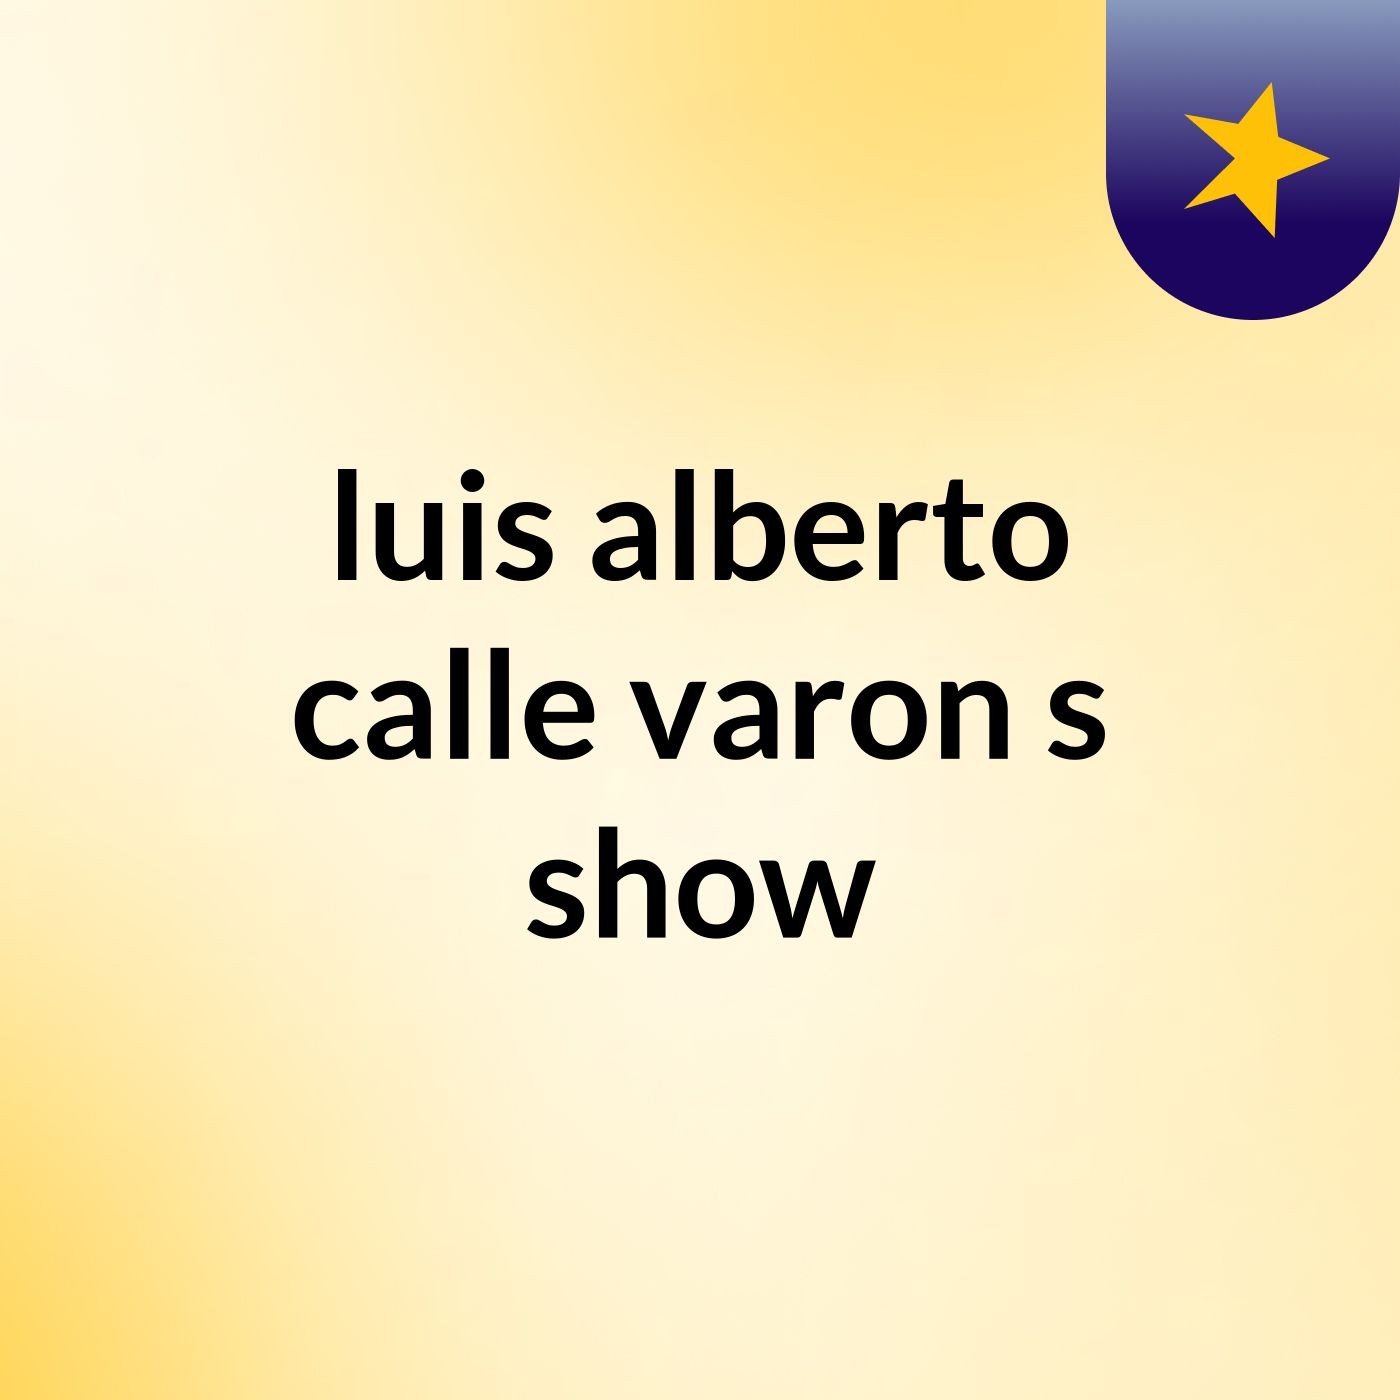 luis alberto calle varon's show